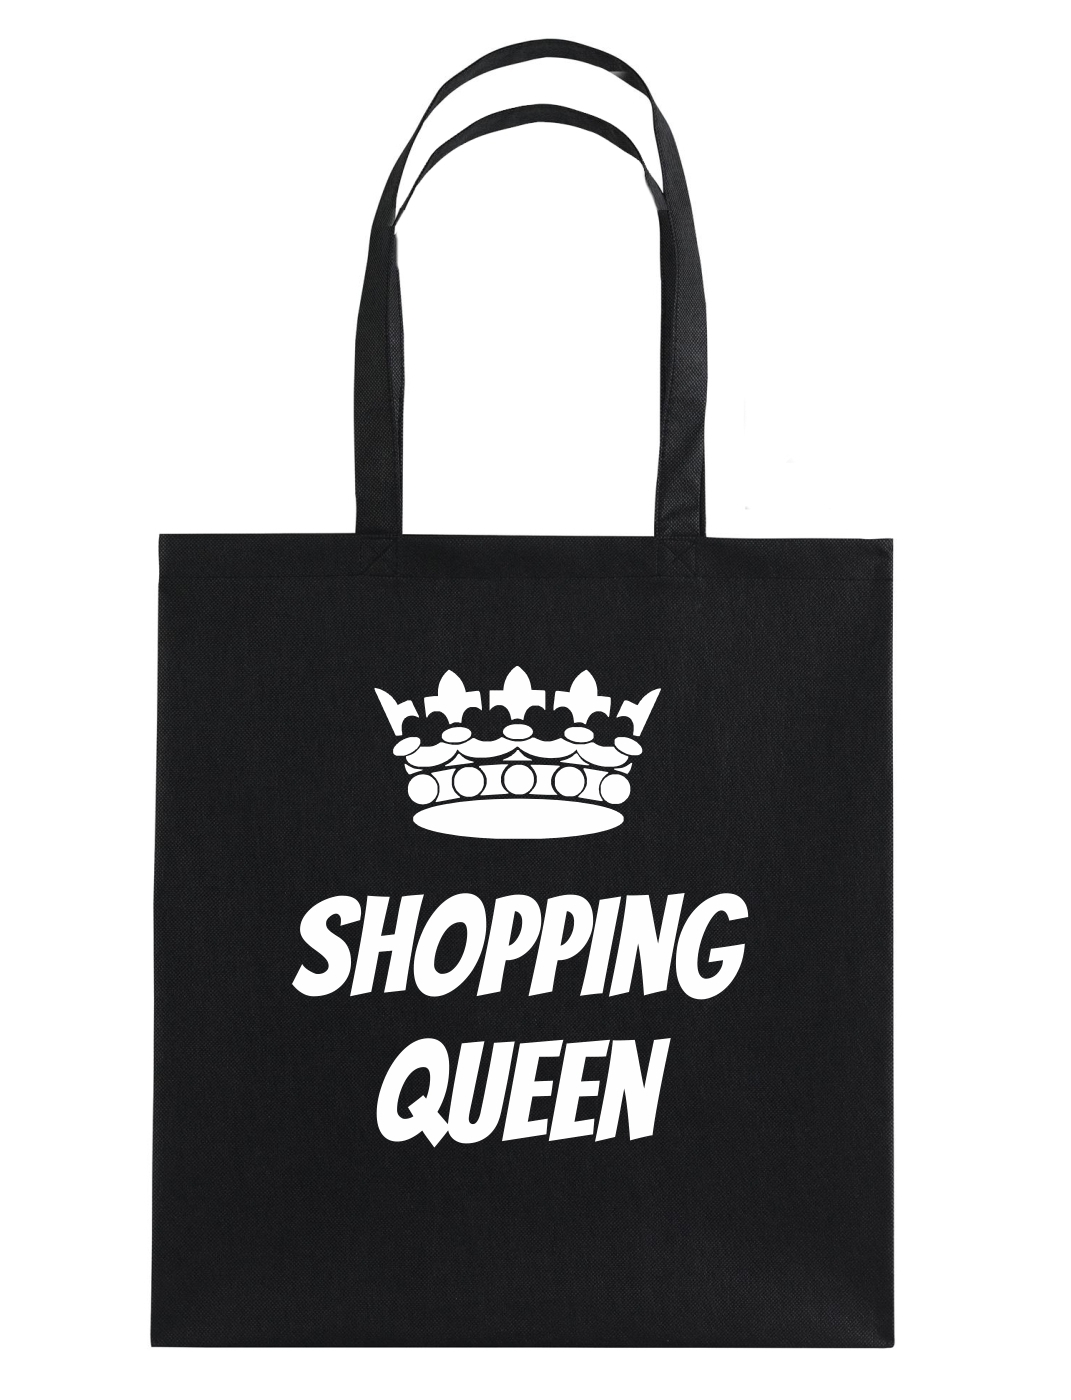 Shopping queen katoenen tas